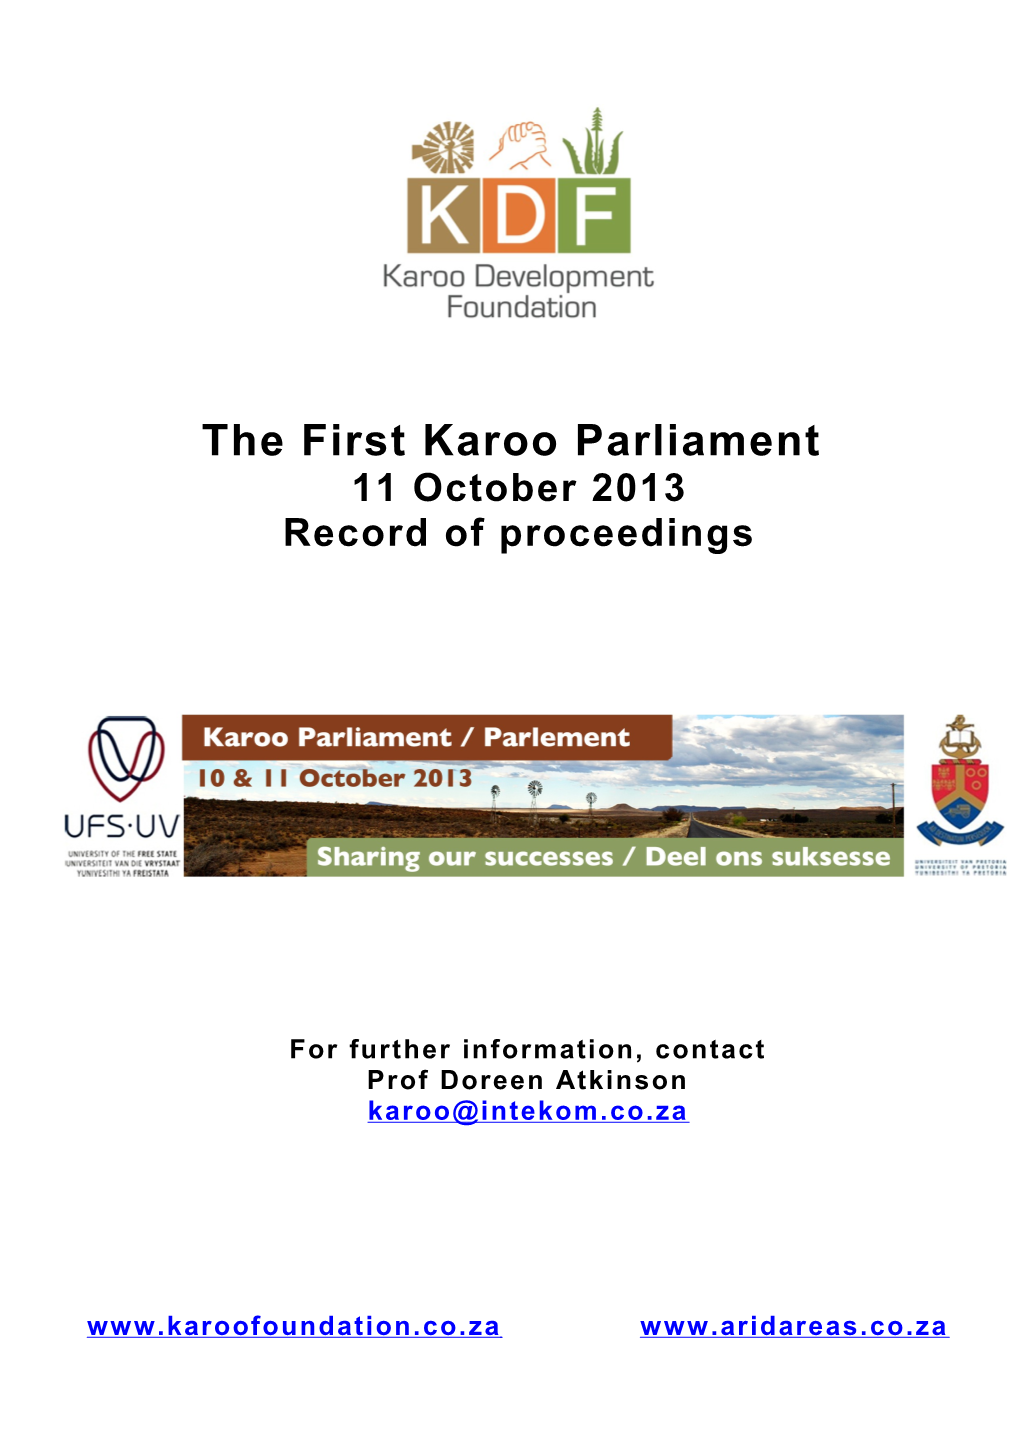 The First Karoo Parliament